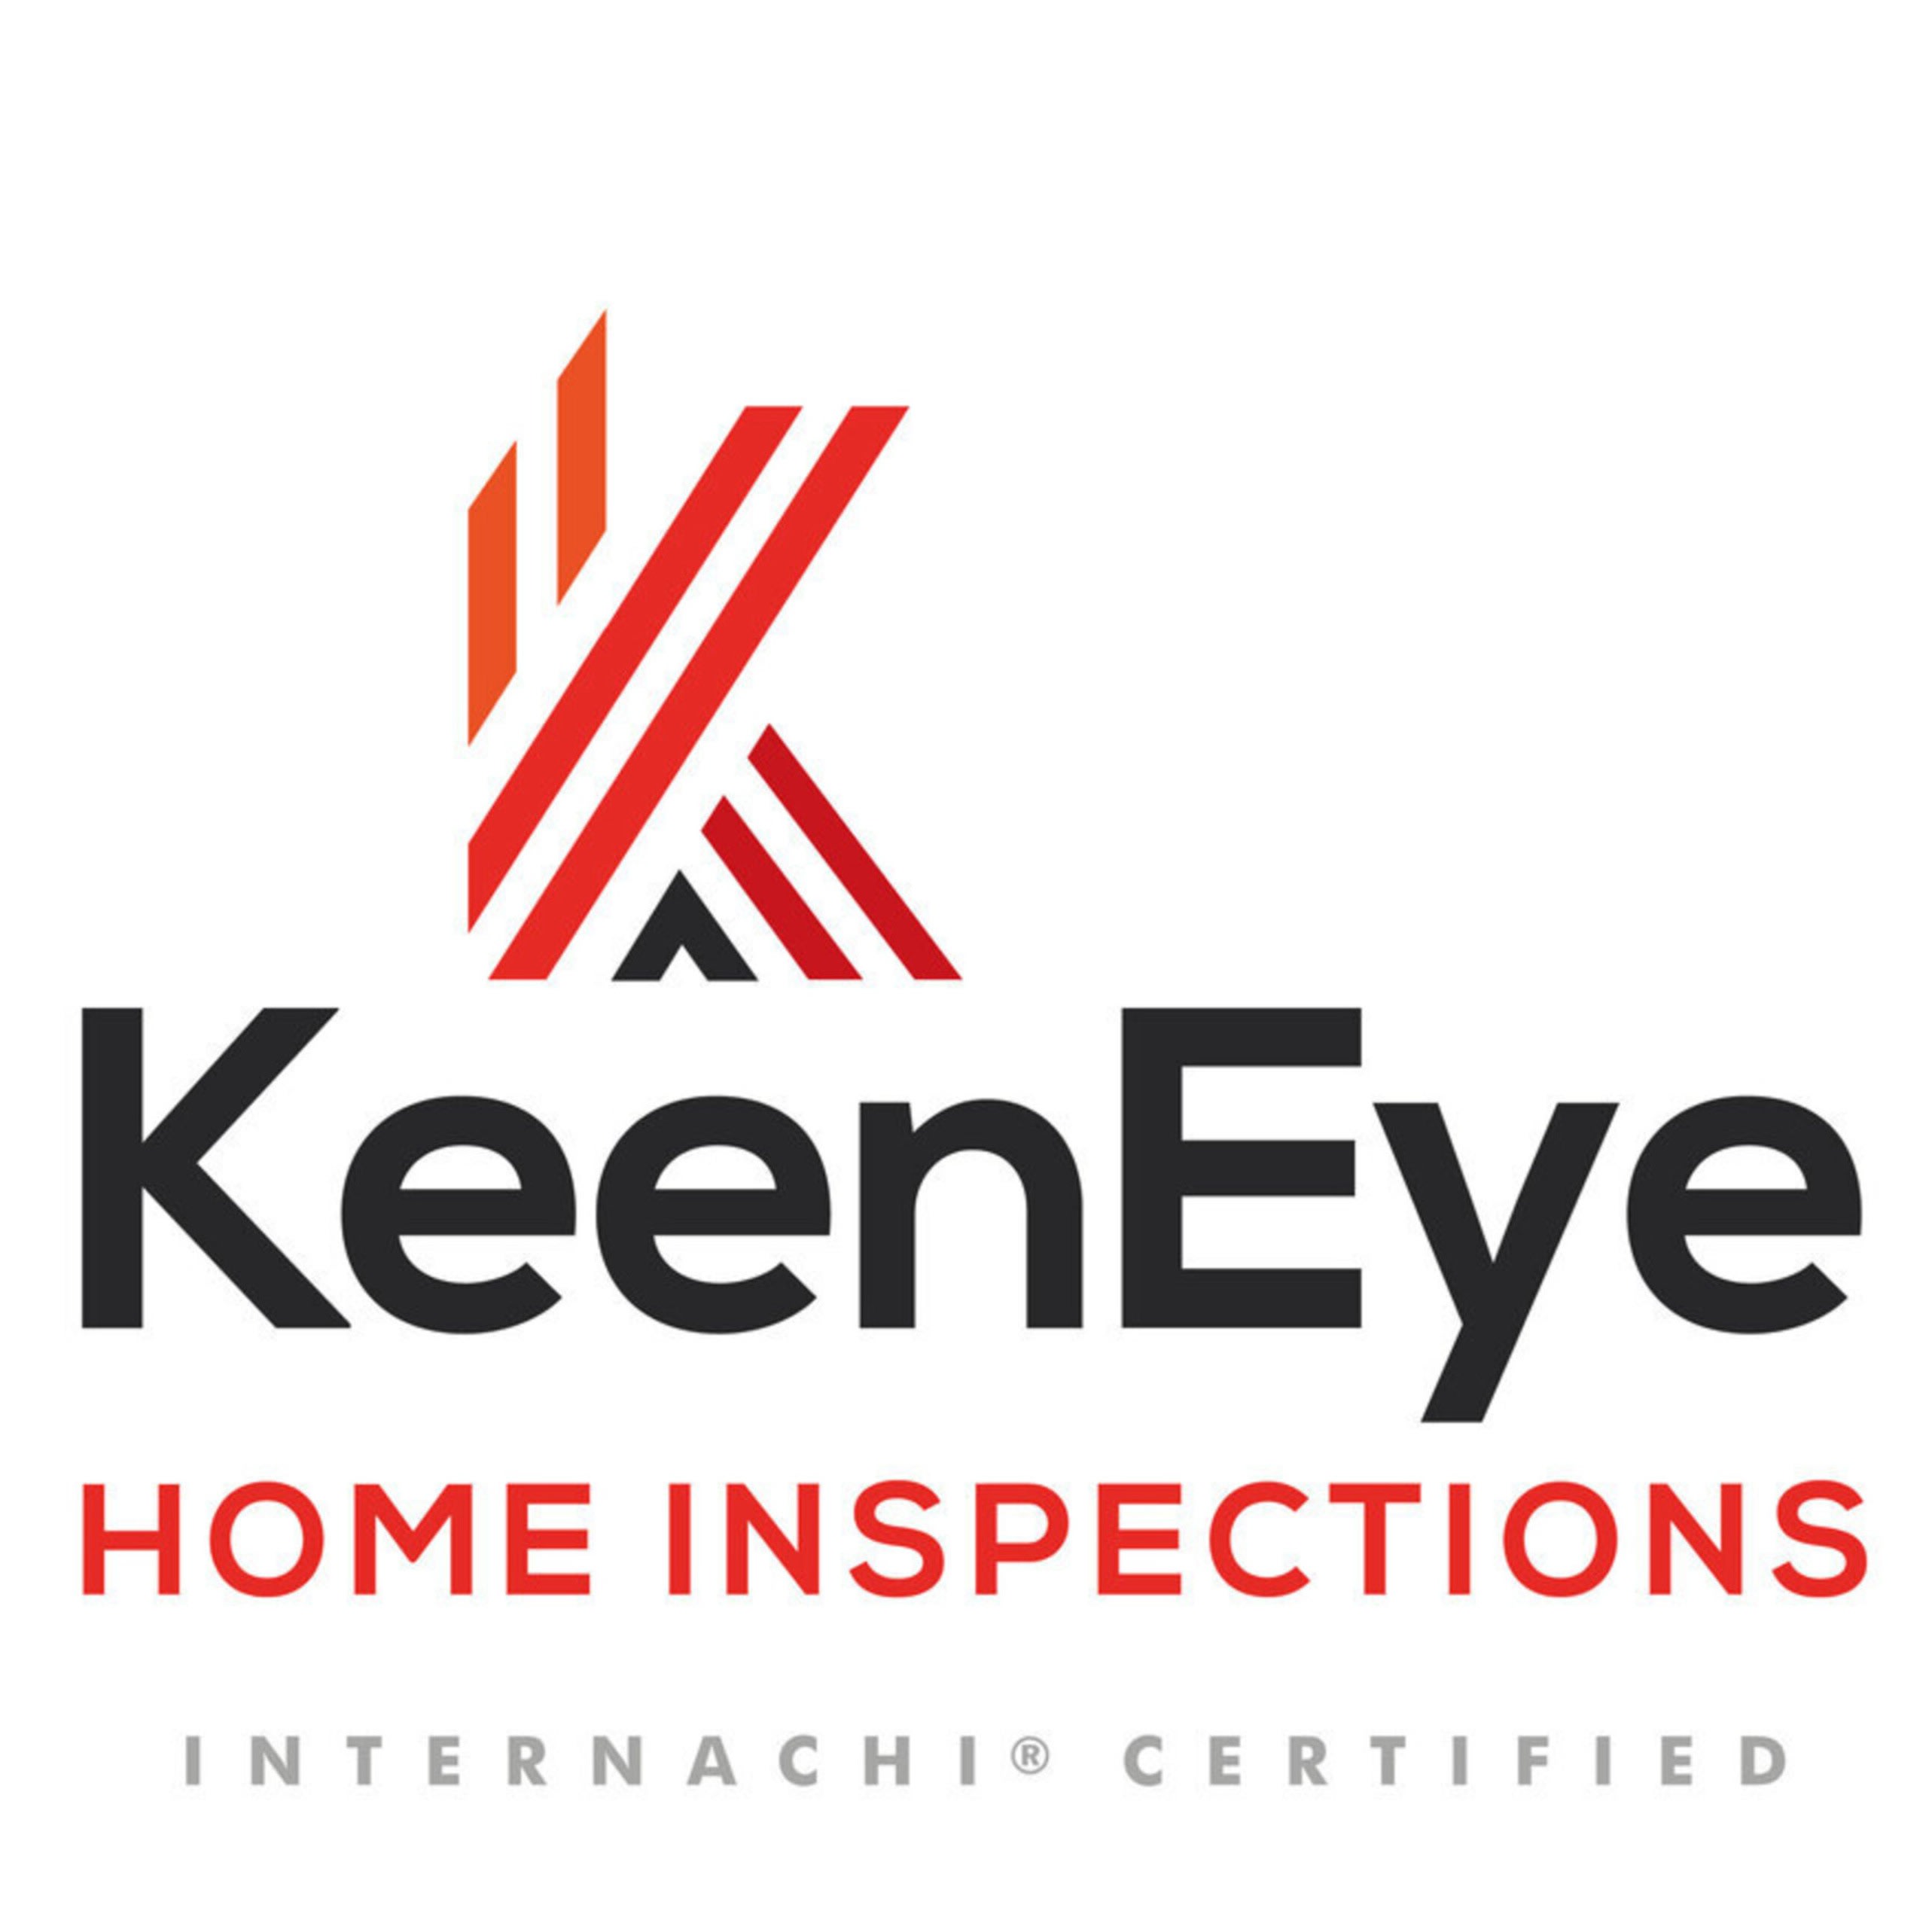 Keen Eye Home Inspections Logo